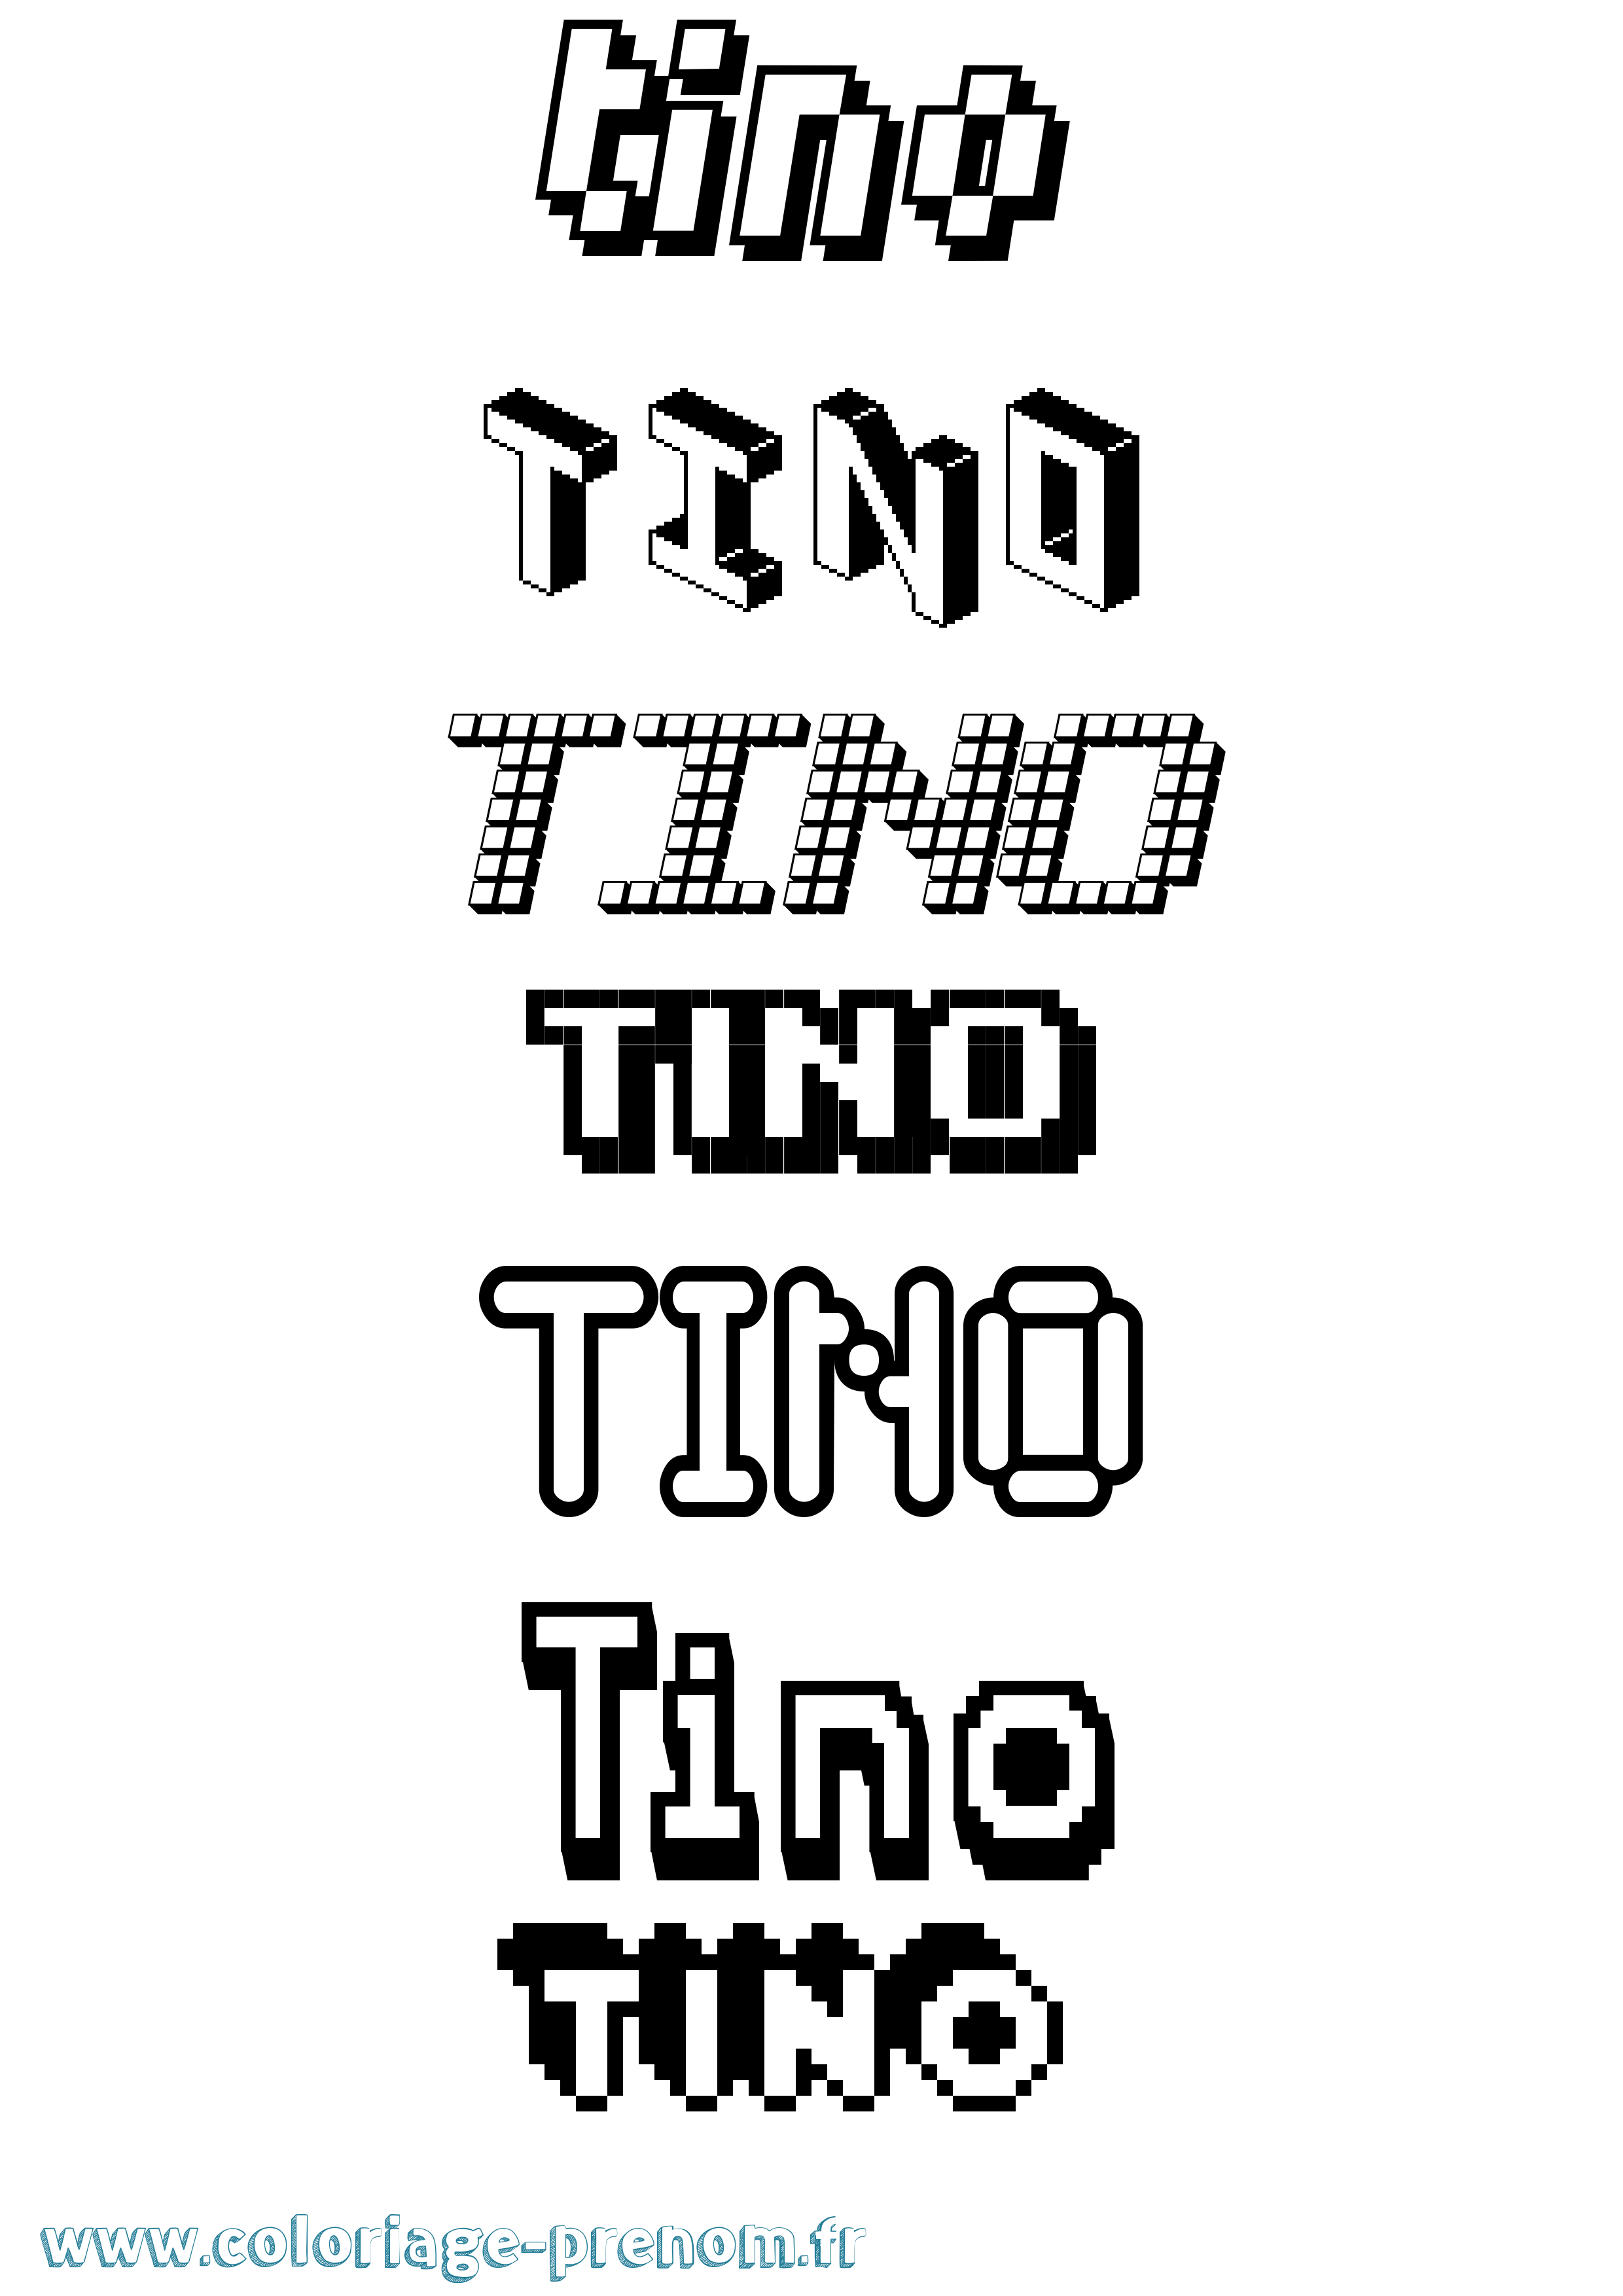 Coloriage prénom Tino Pixel